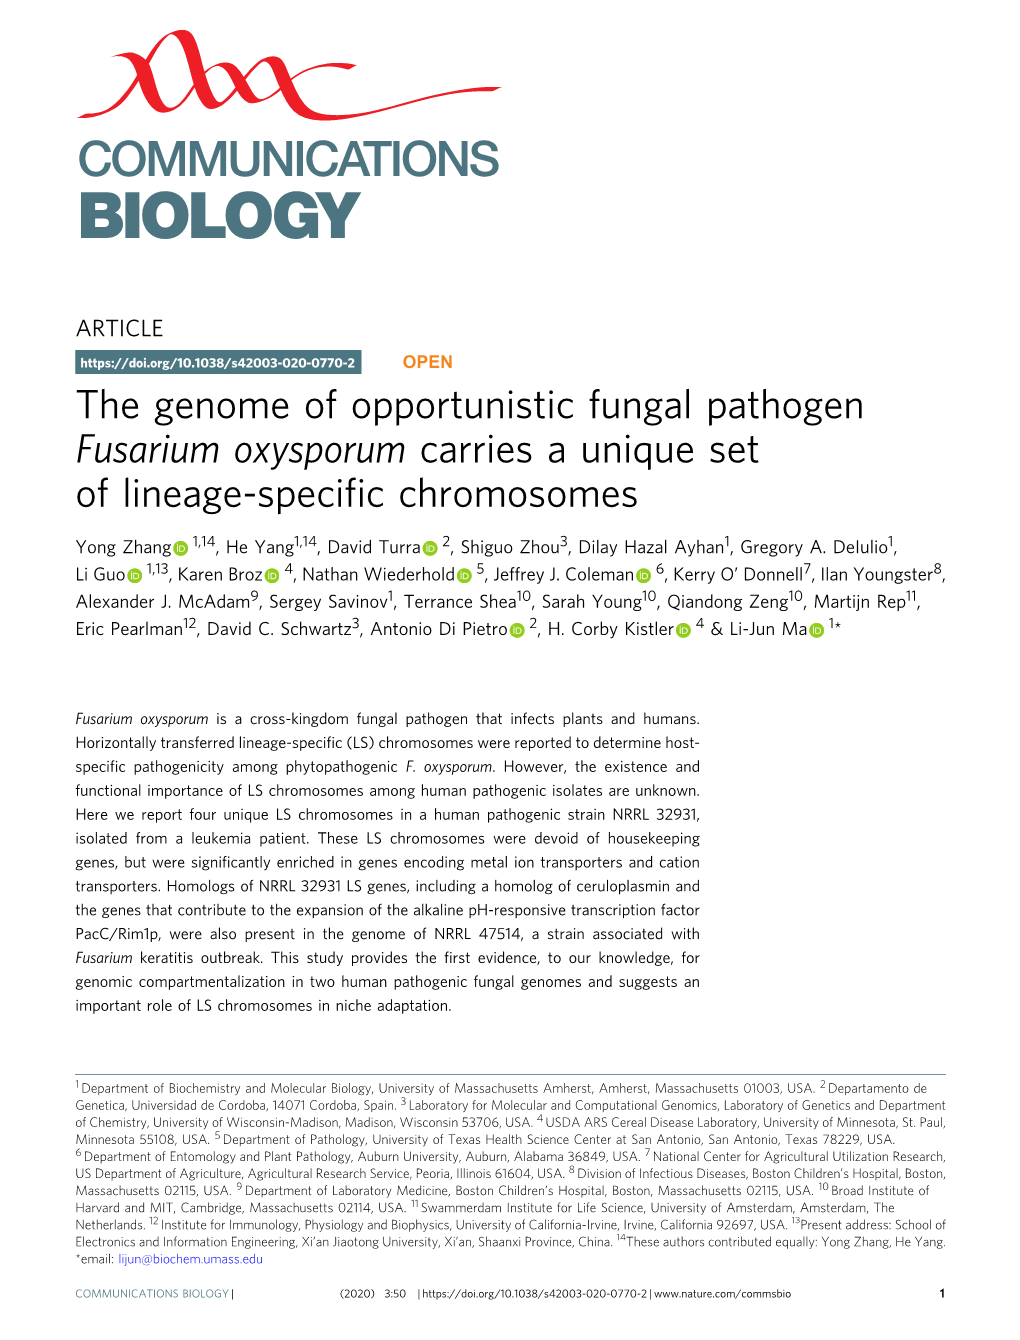 The Genome of Opportunistic Fungal Pathogen Fusarium Oxysporum Carries a Unique Set of Lineage-Speciﬁc Chromosomes